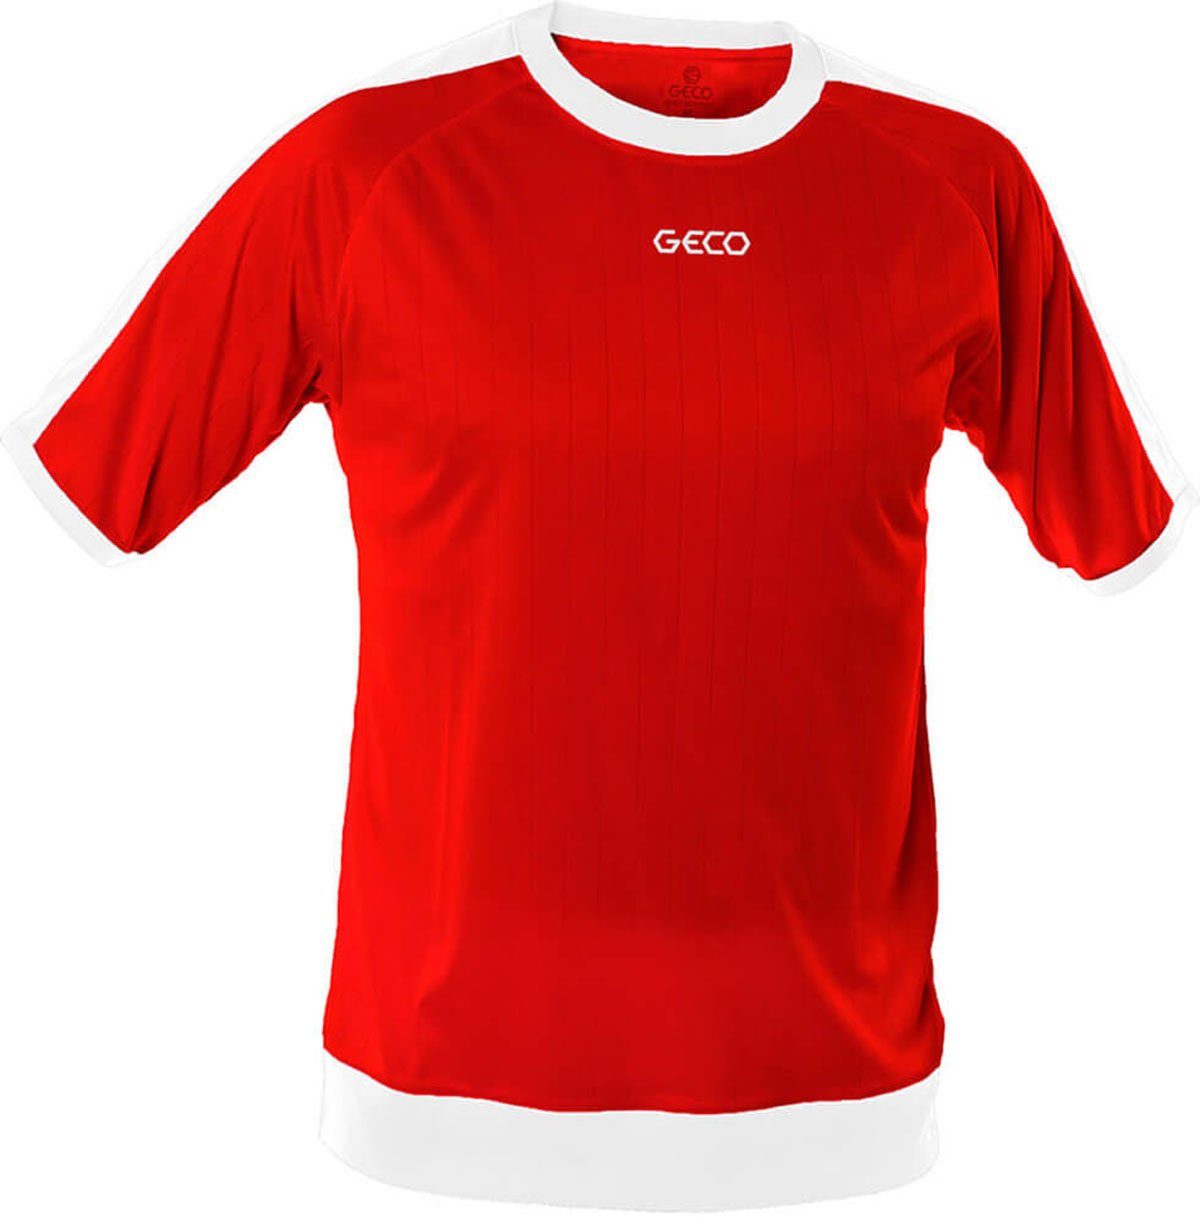 Fußballtrikot Sportswear Geco rot/weiß Trikot NOTOS zweifarbig kurzarm Geco Fußball